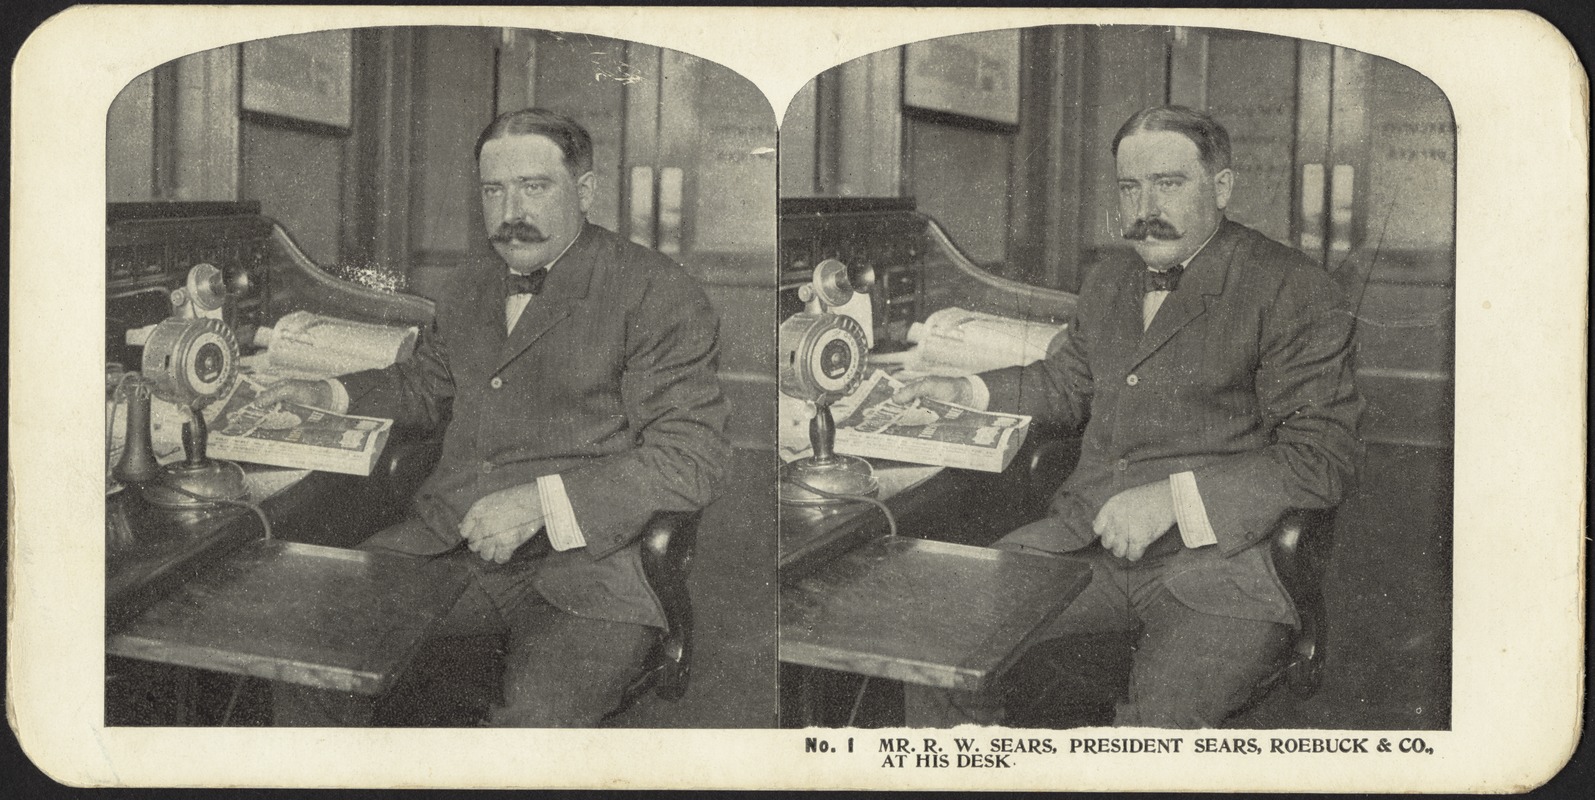 Mr. R. W. Sears, President Sears, Roebuck & Co. at his desk